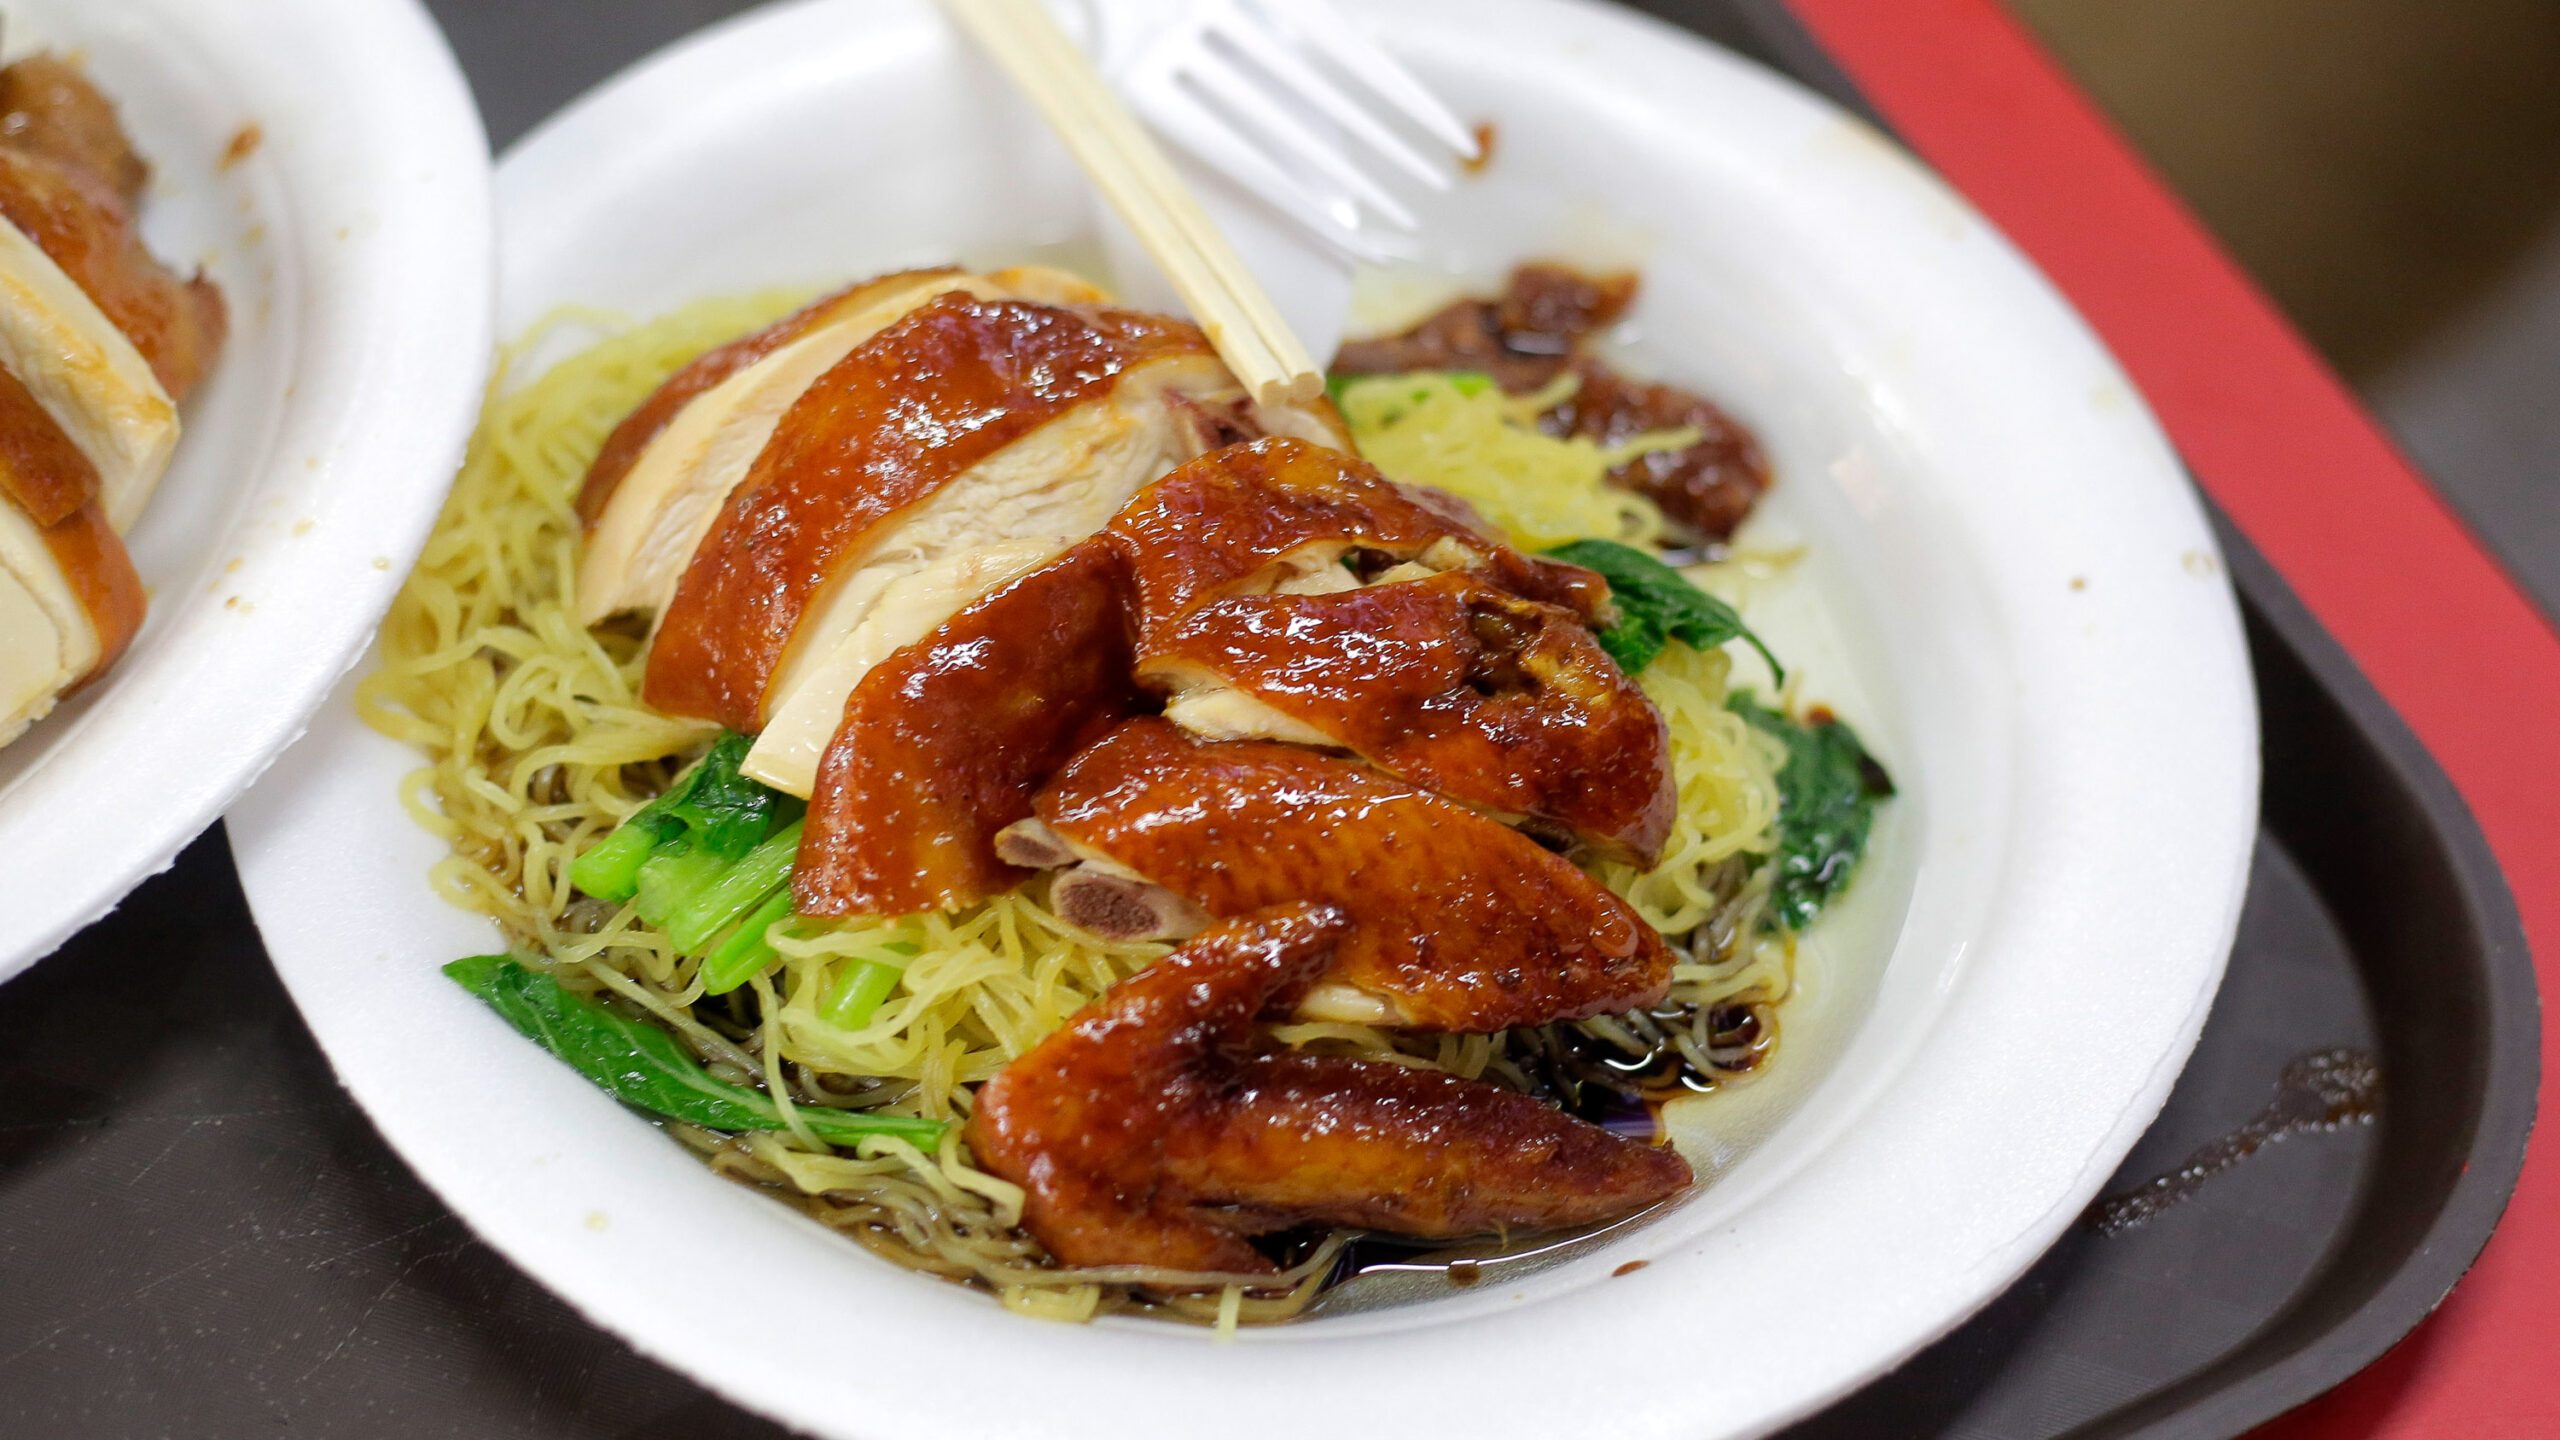 [WATCH] In demand: Singapore’s Michelin-starred street food